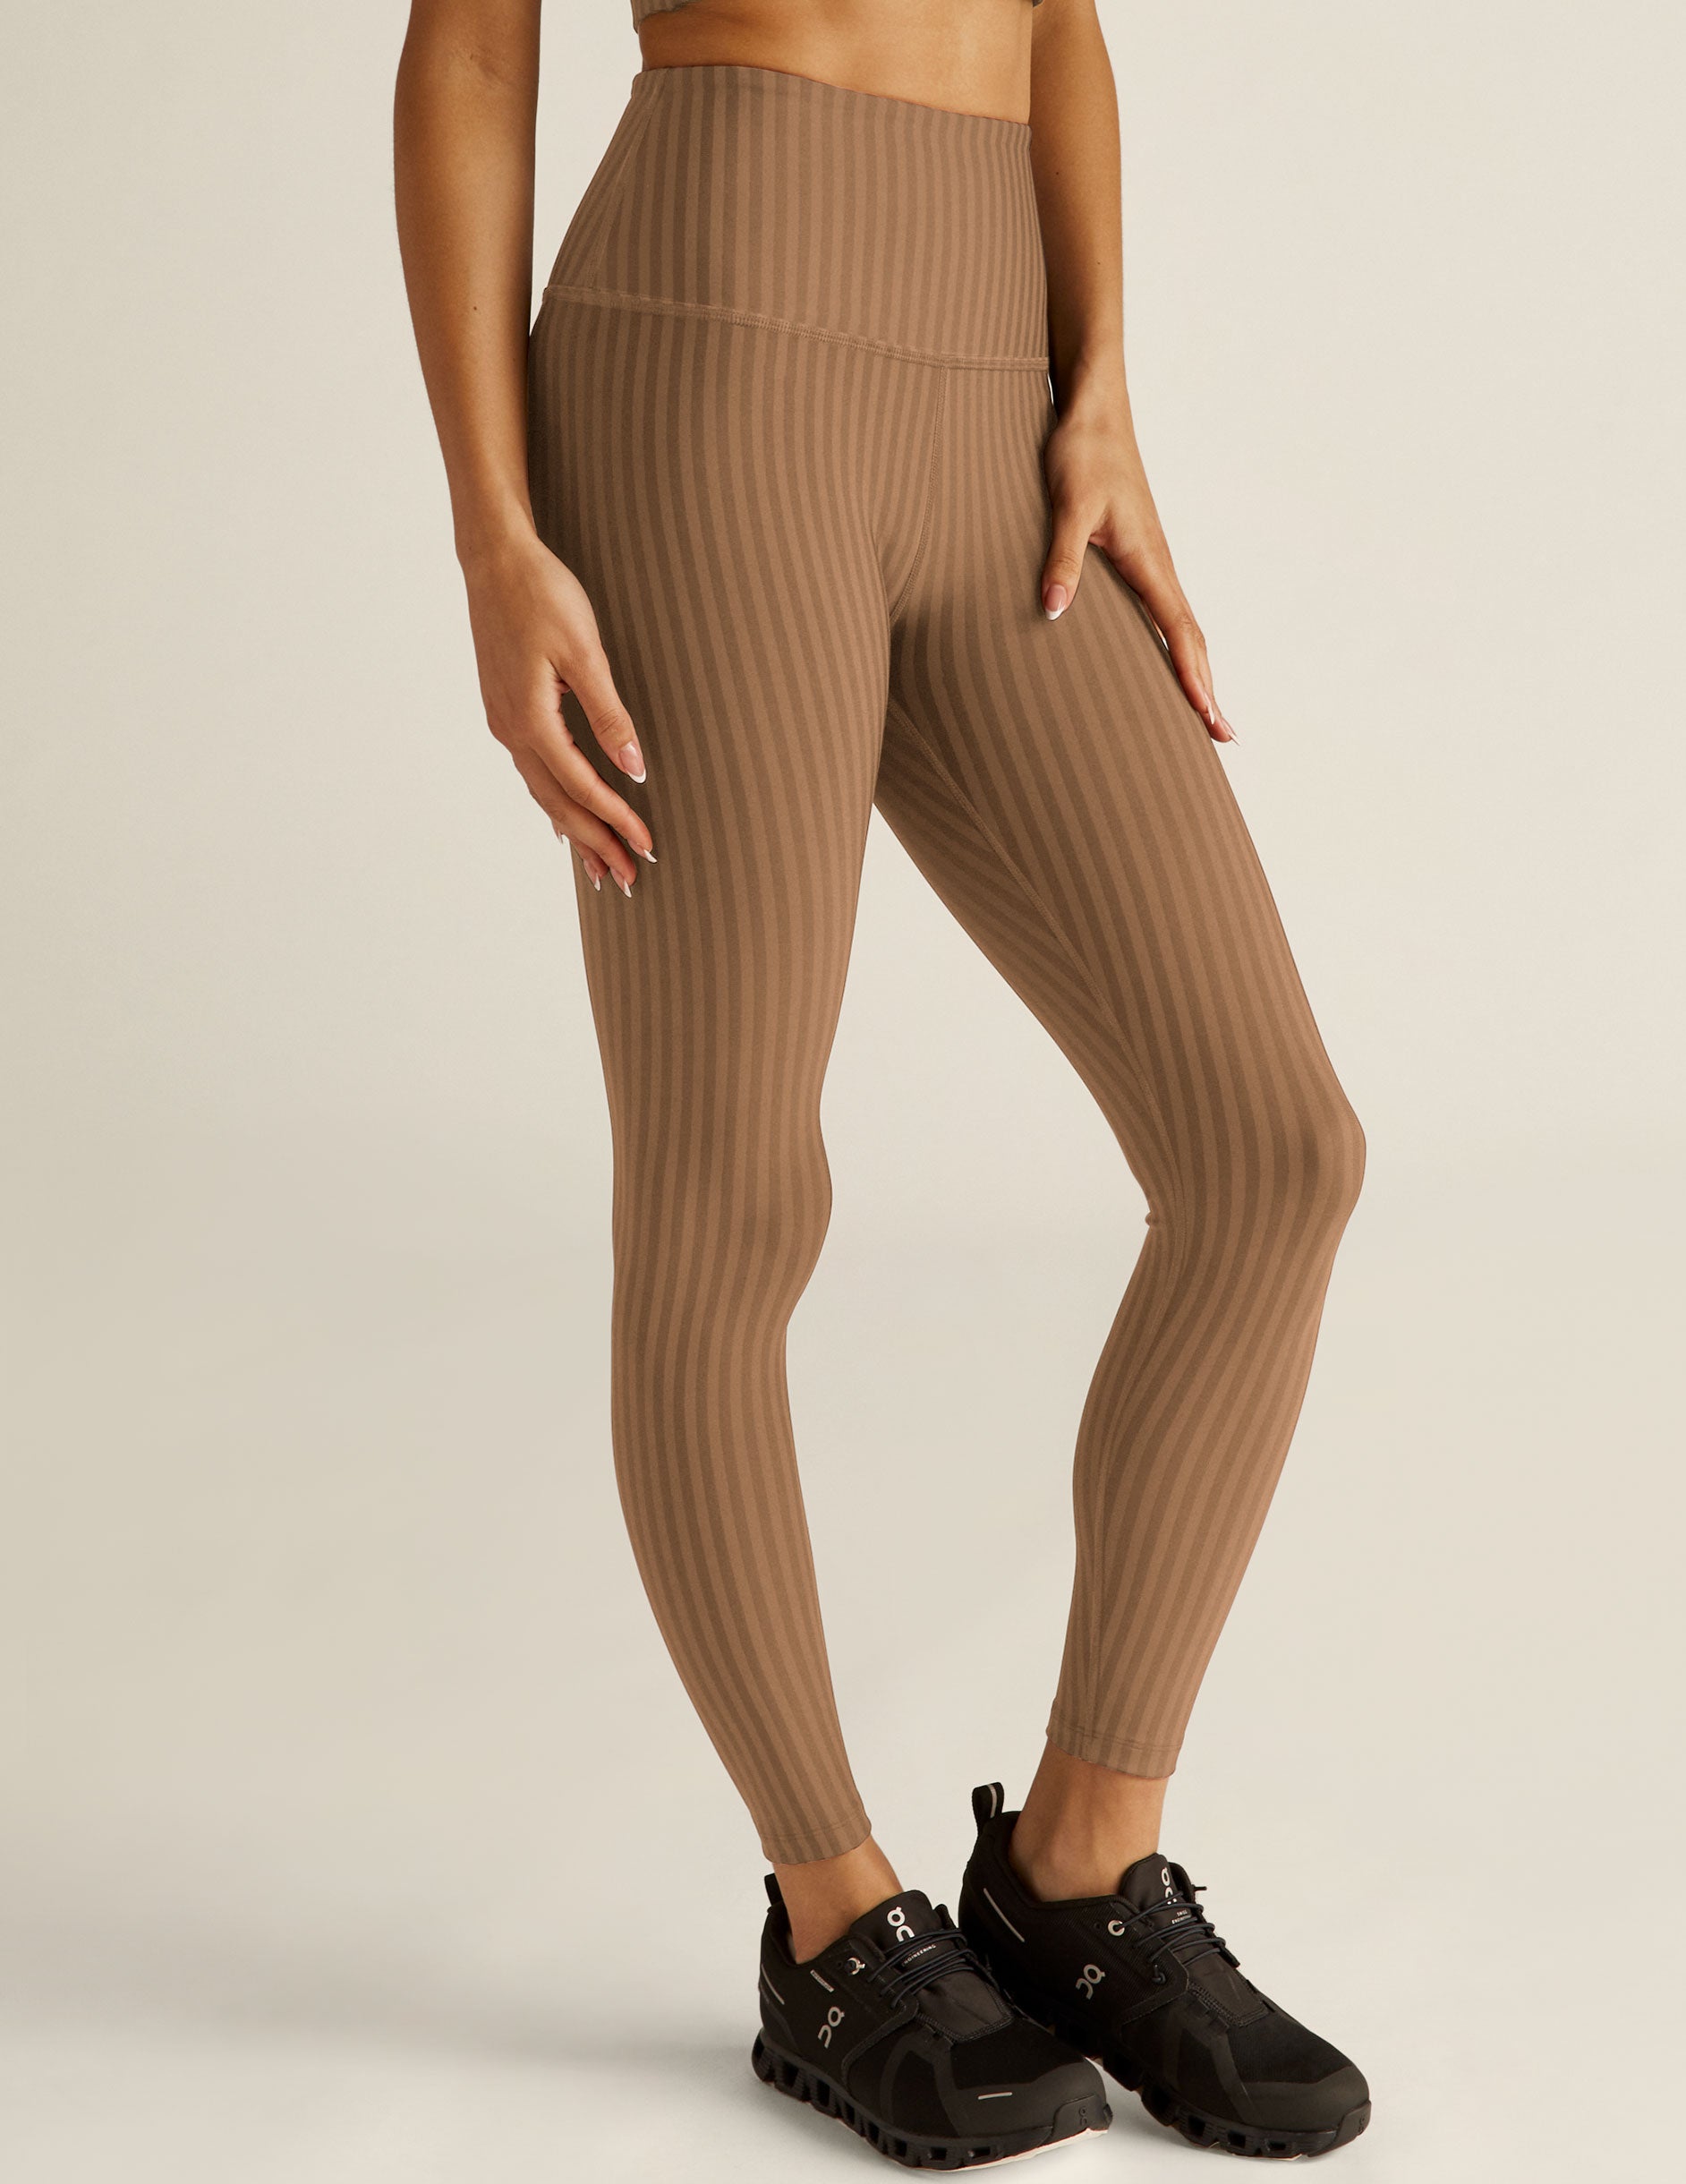 brown pin-striped printed high-waisted midi leggings.